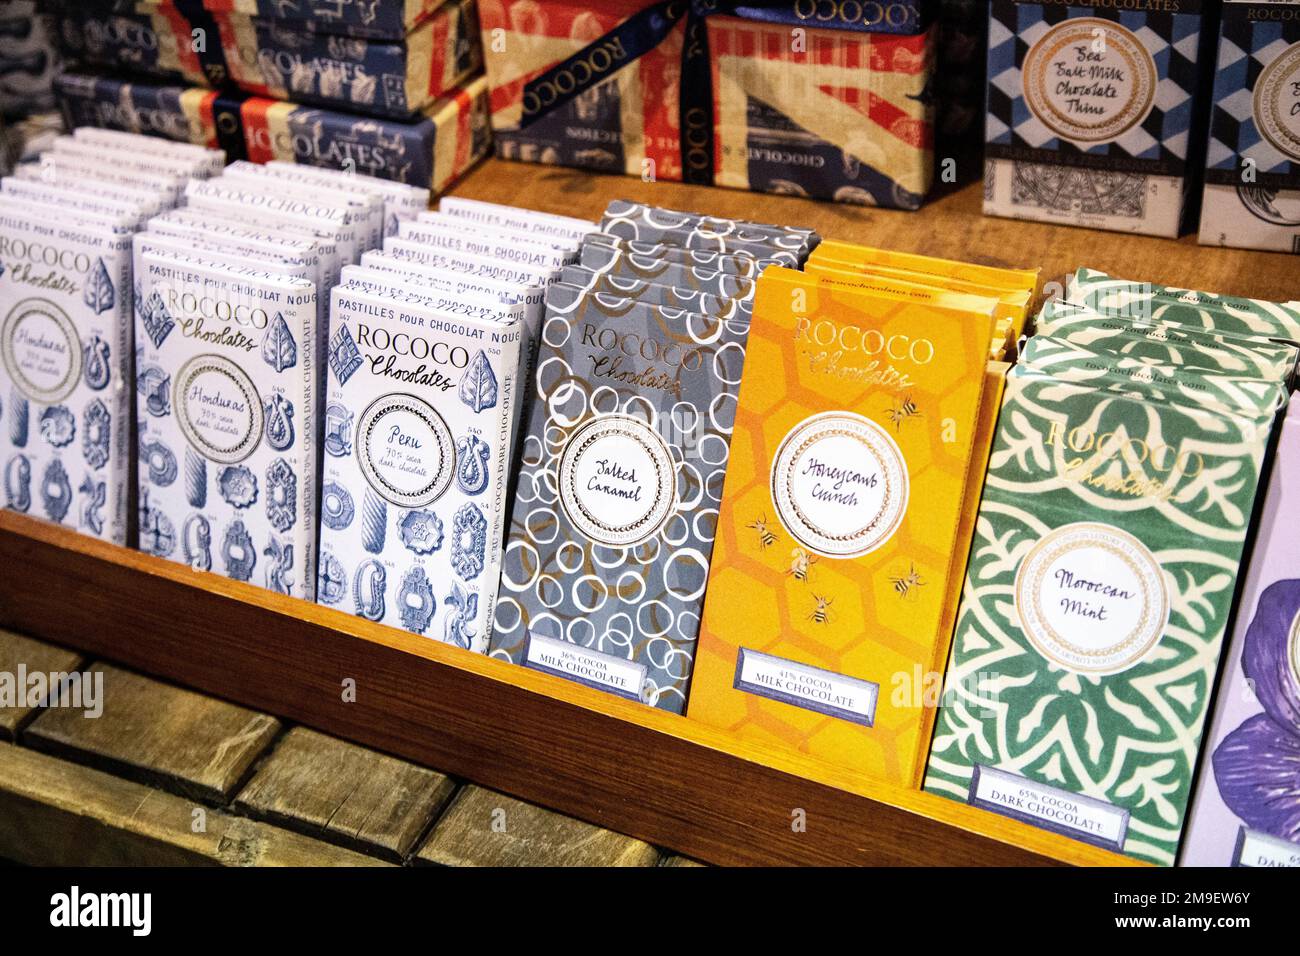 Display of Rococo Chocolates chocolate bars, Liberty London department store, London, UK Stock Photo